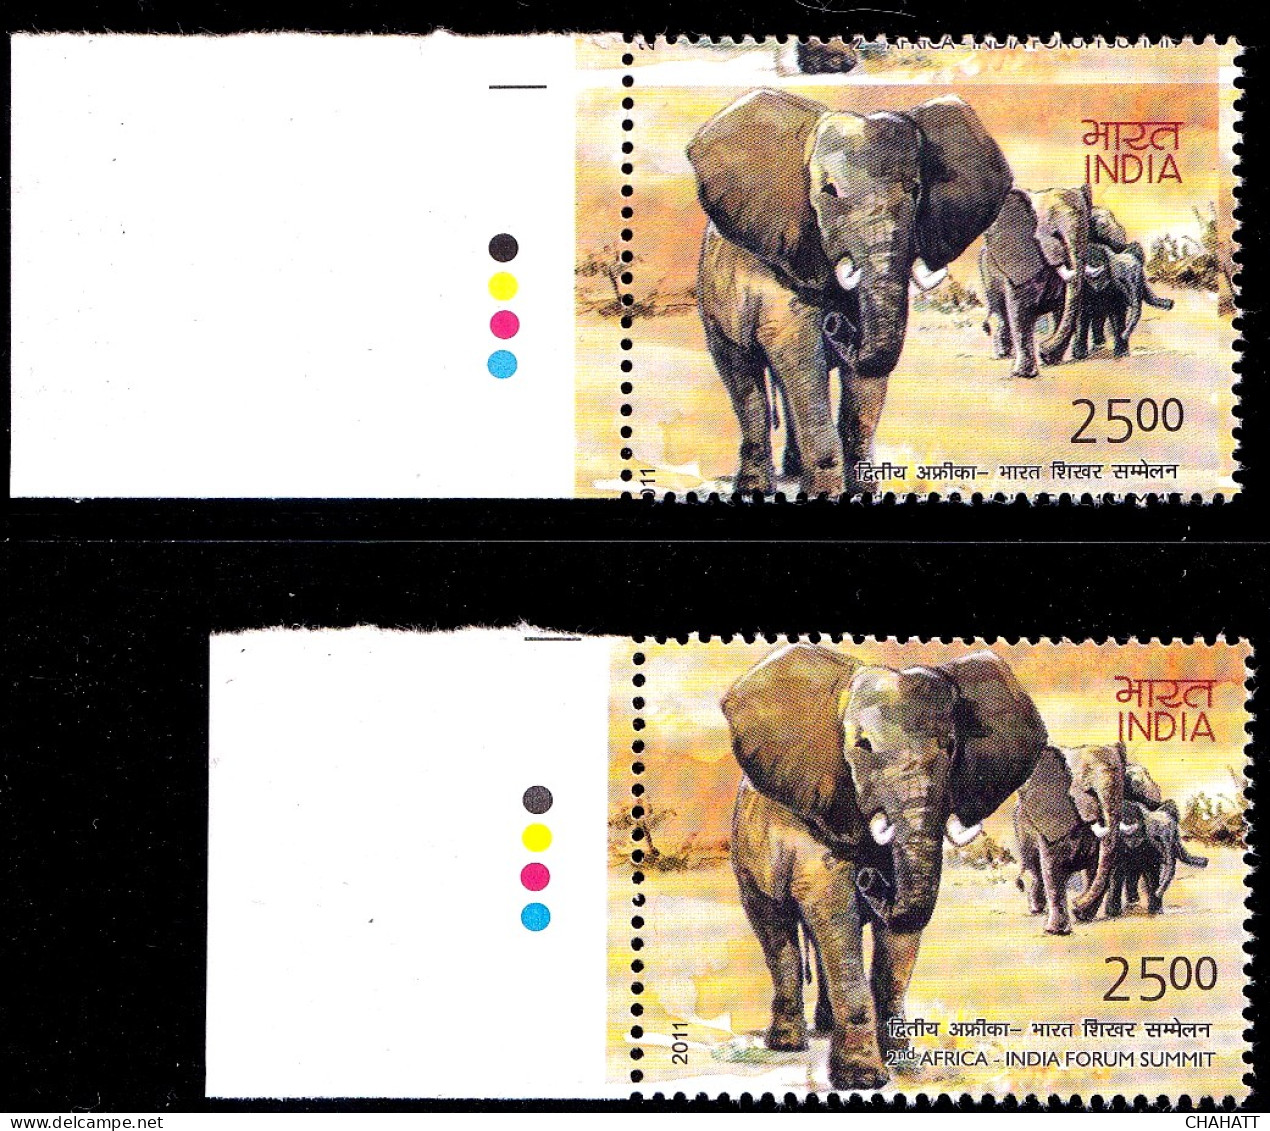 INDIA-2011-2500p-ELEPHANT- AFRICA INDIA SUMMIT- FRAME SHIFTED - DRAMATIC PERFORATION SHIFT-MNH IE-19 - Variétés Et Curiosités